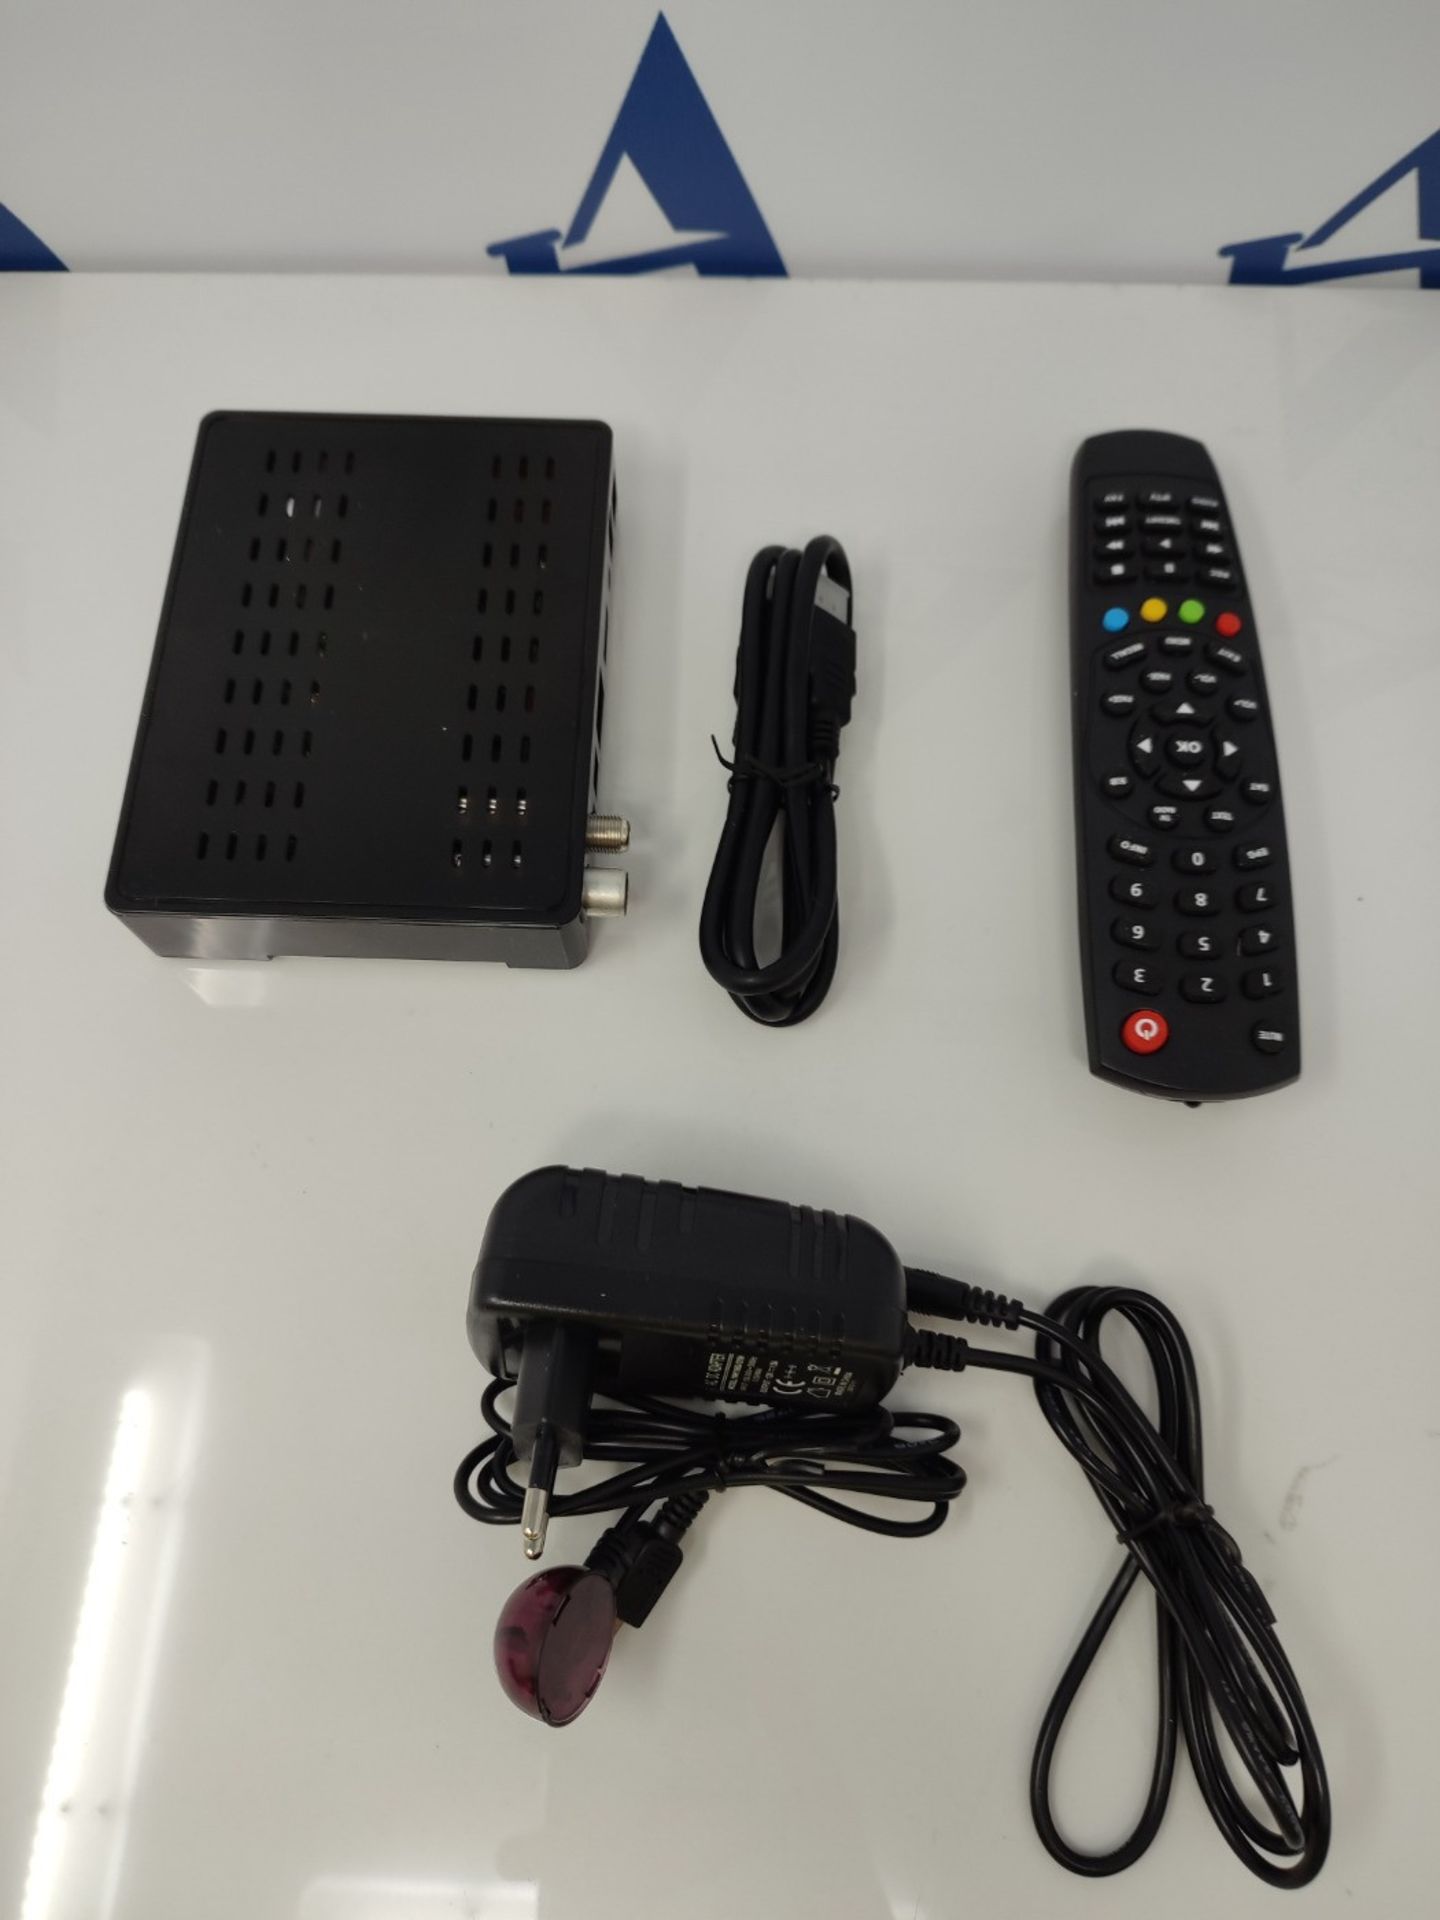 hd-line Tivusat s2 satellite satellite receiver - digital IPTV box and card (HDTV, WiF - Image 3 of 3